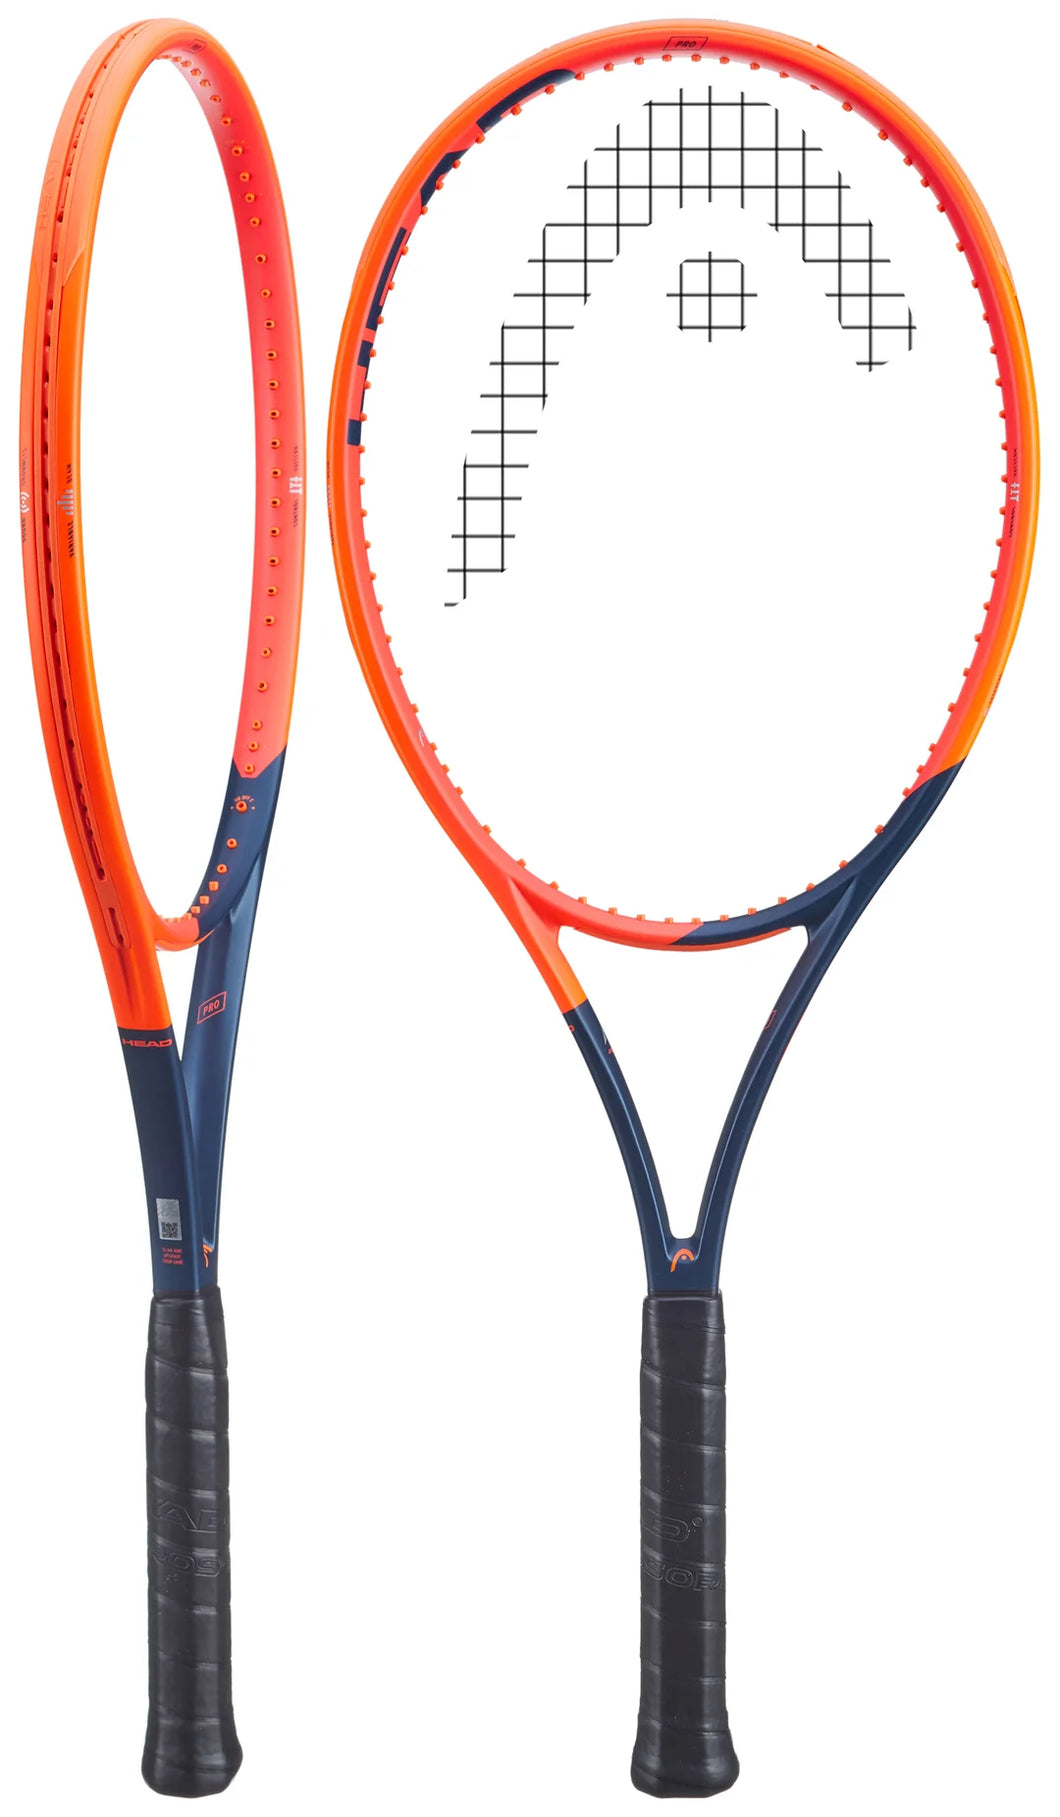 Head Radical Pro 2023 (315g) tennis racket - 2023 NEW ARRIVAL